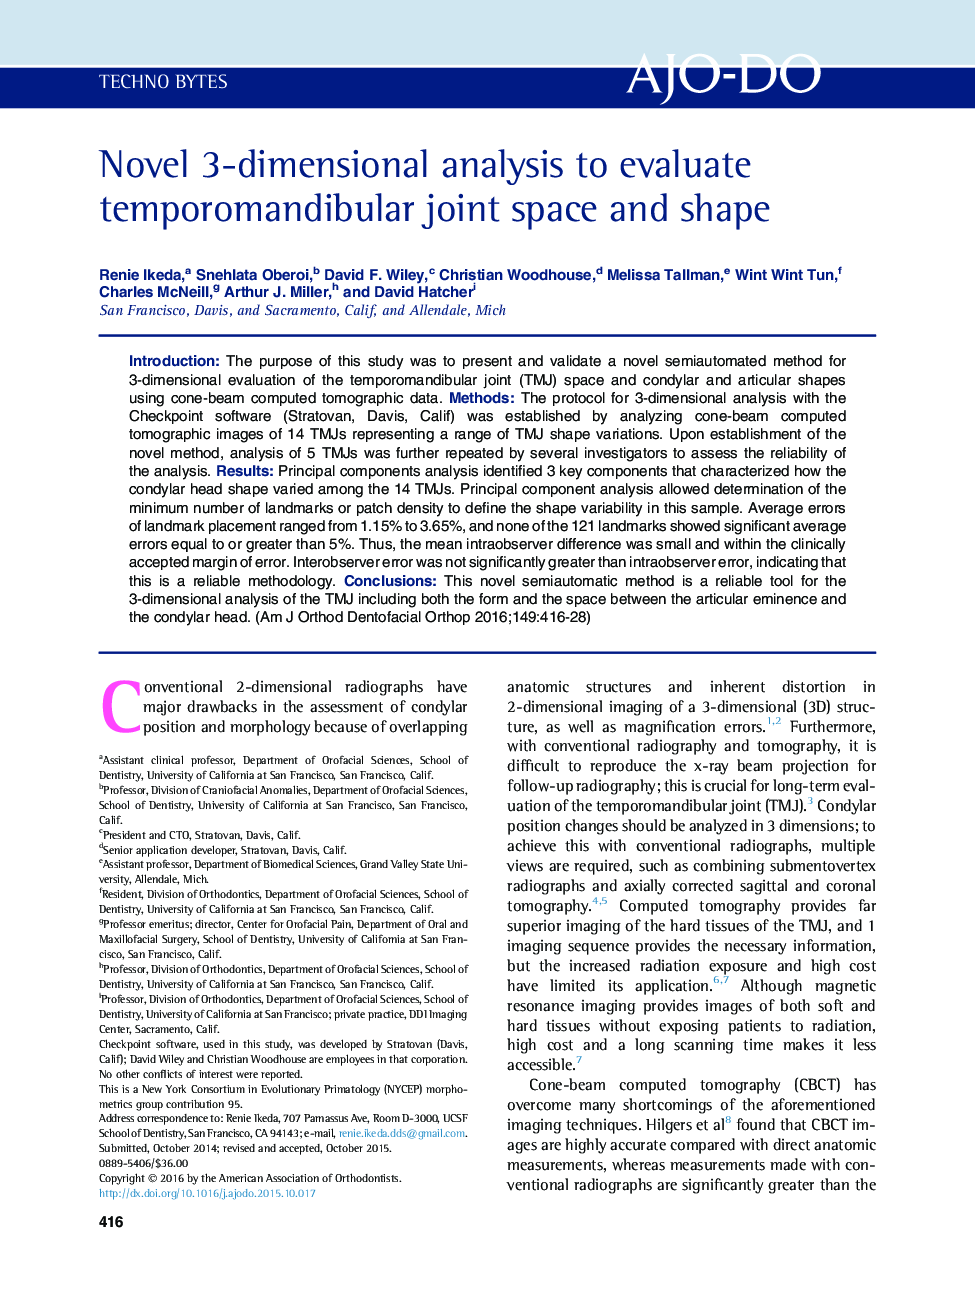 Novel 3-dimensional analysis to evaluate temporomandibular joint space and shape 